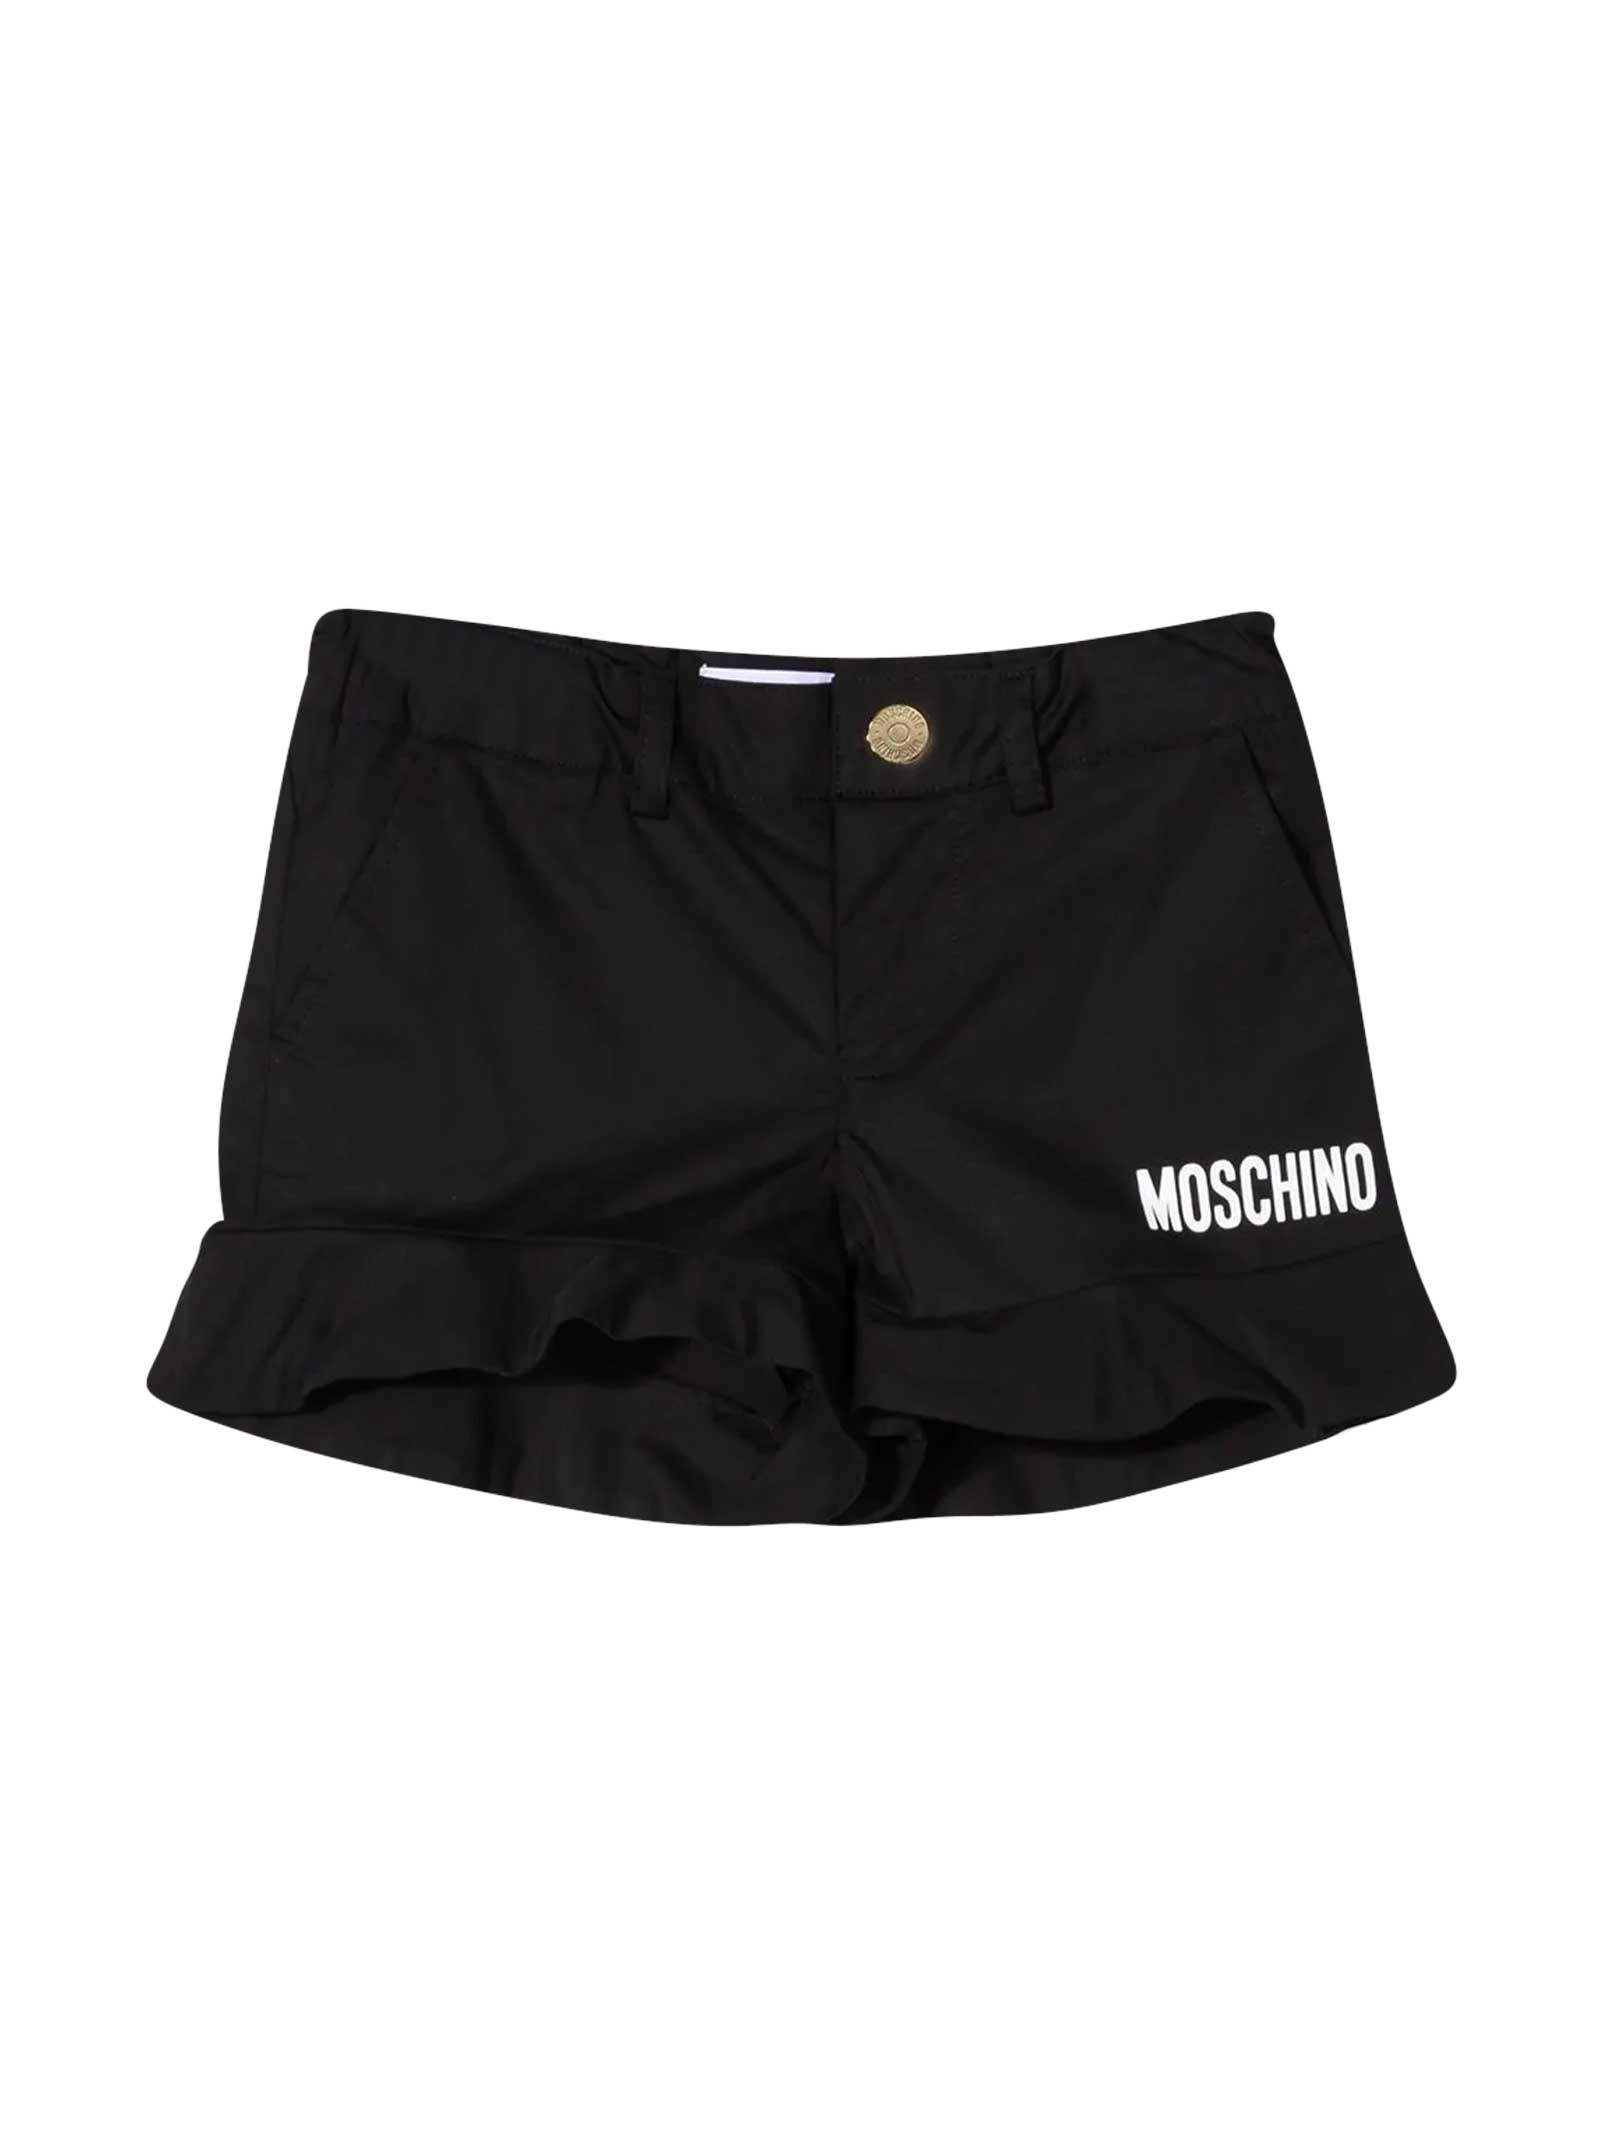 Moschino Black Shorts With Logo